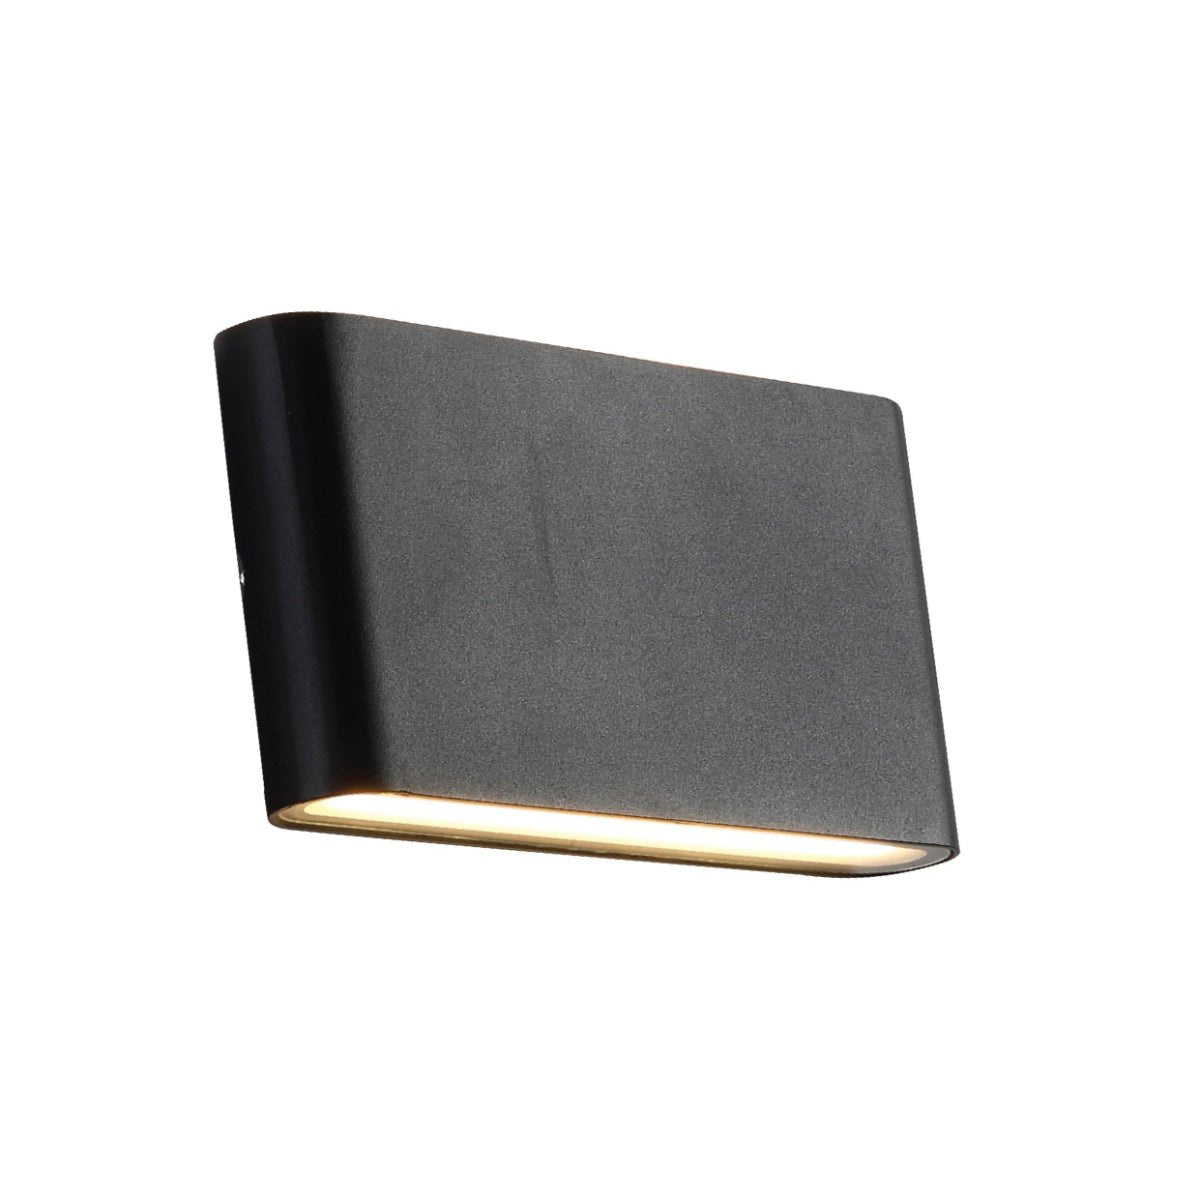 Main image of Black Slim Cuboid Up Down Outdoor Modern LED Wall Light | TEKLED 182-03376